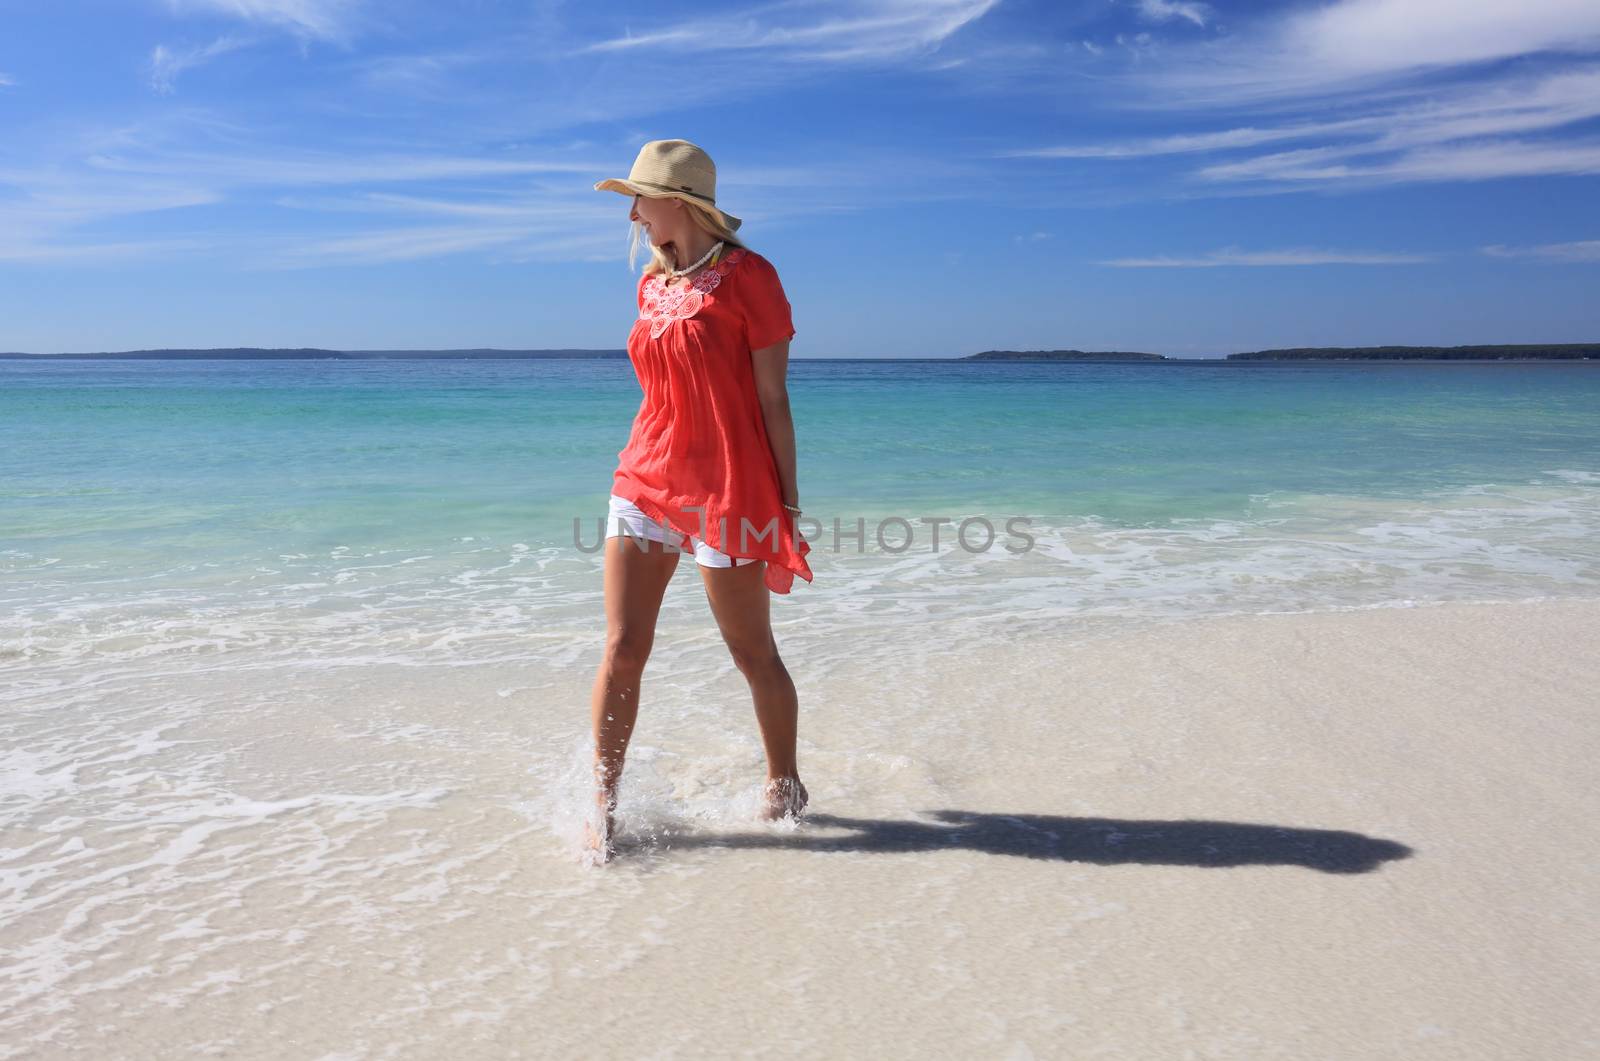 Happy smiling woman wearing a sun hat splashing feet while walking along the beach.   Some motion in splashing water and feet.